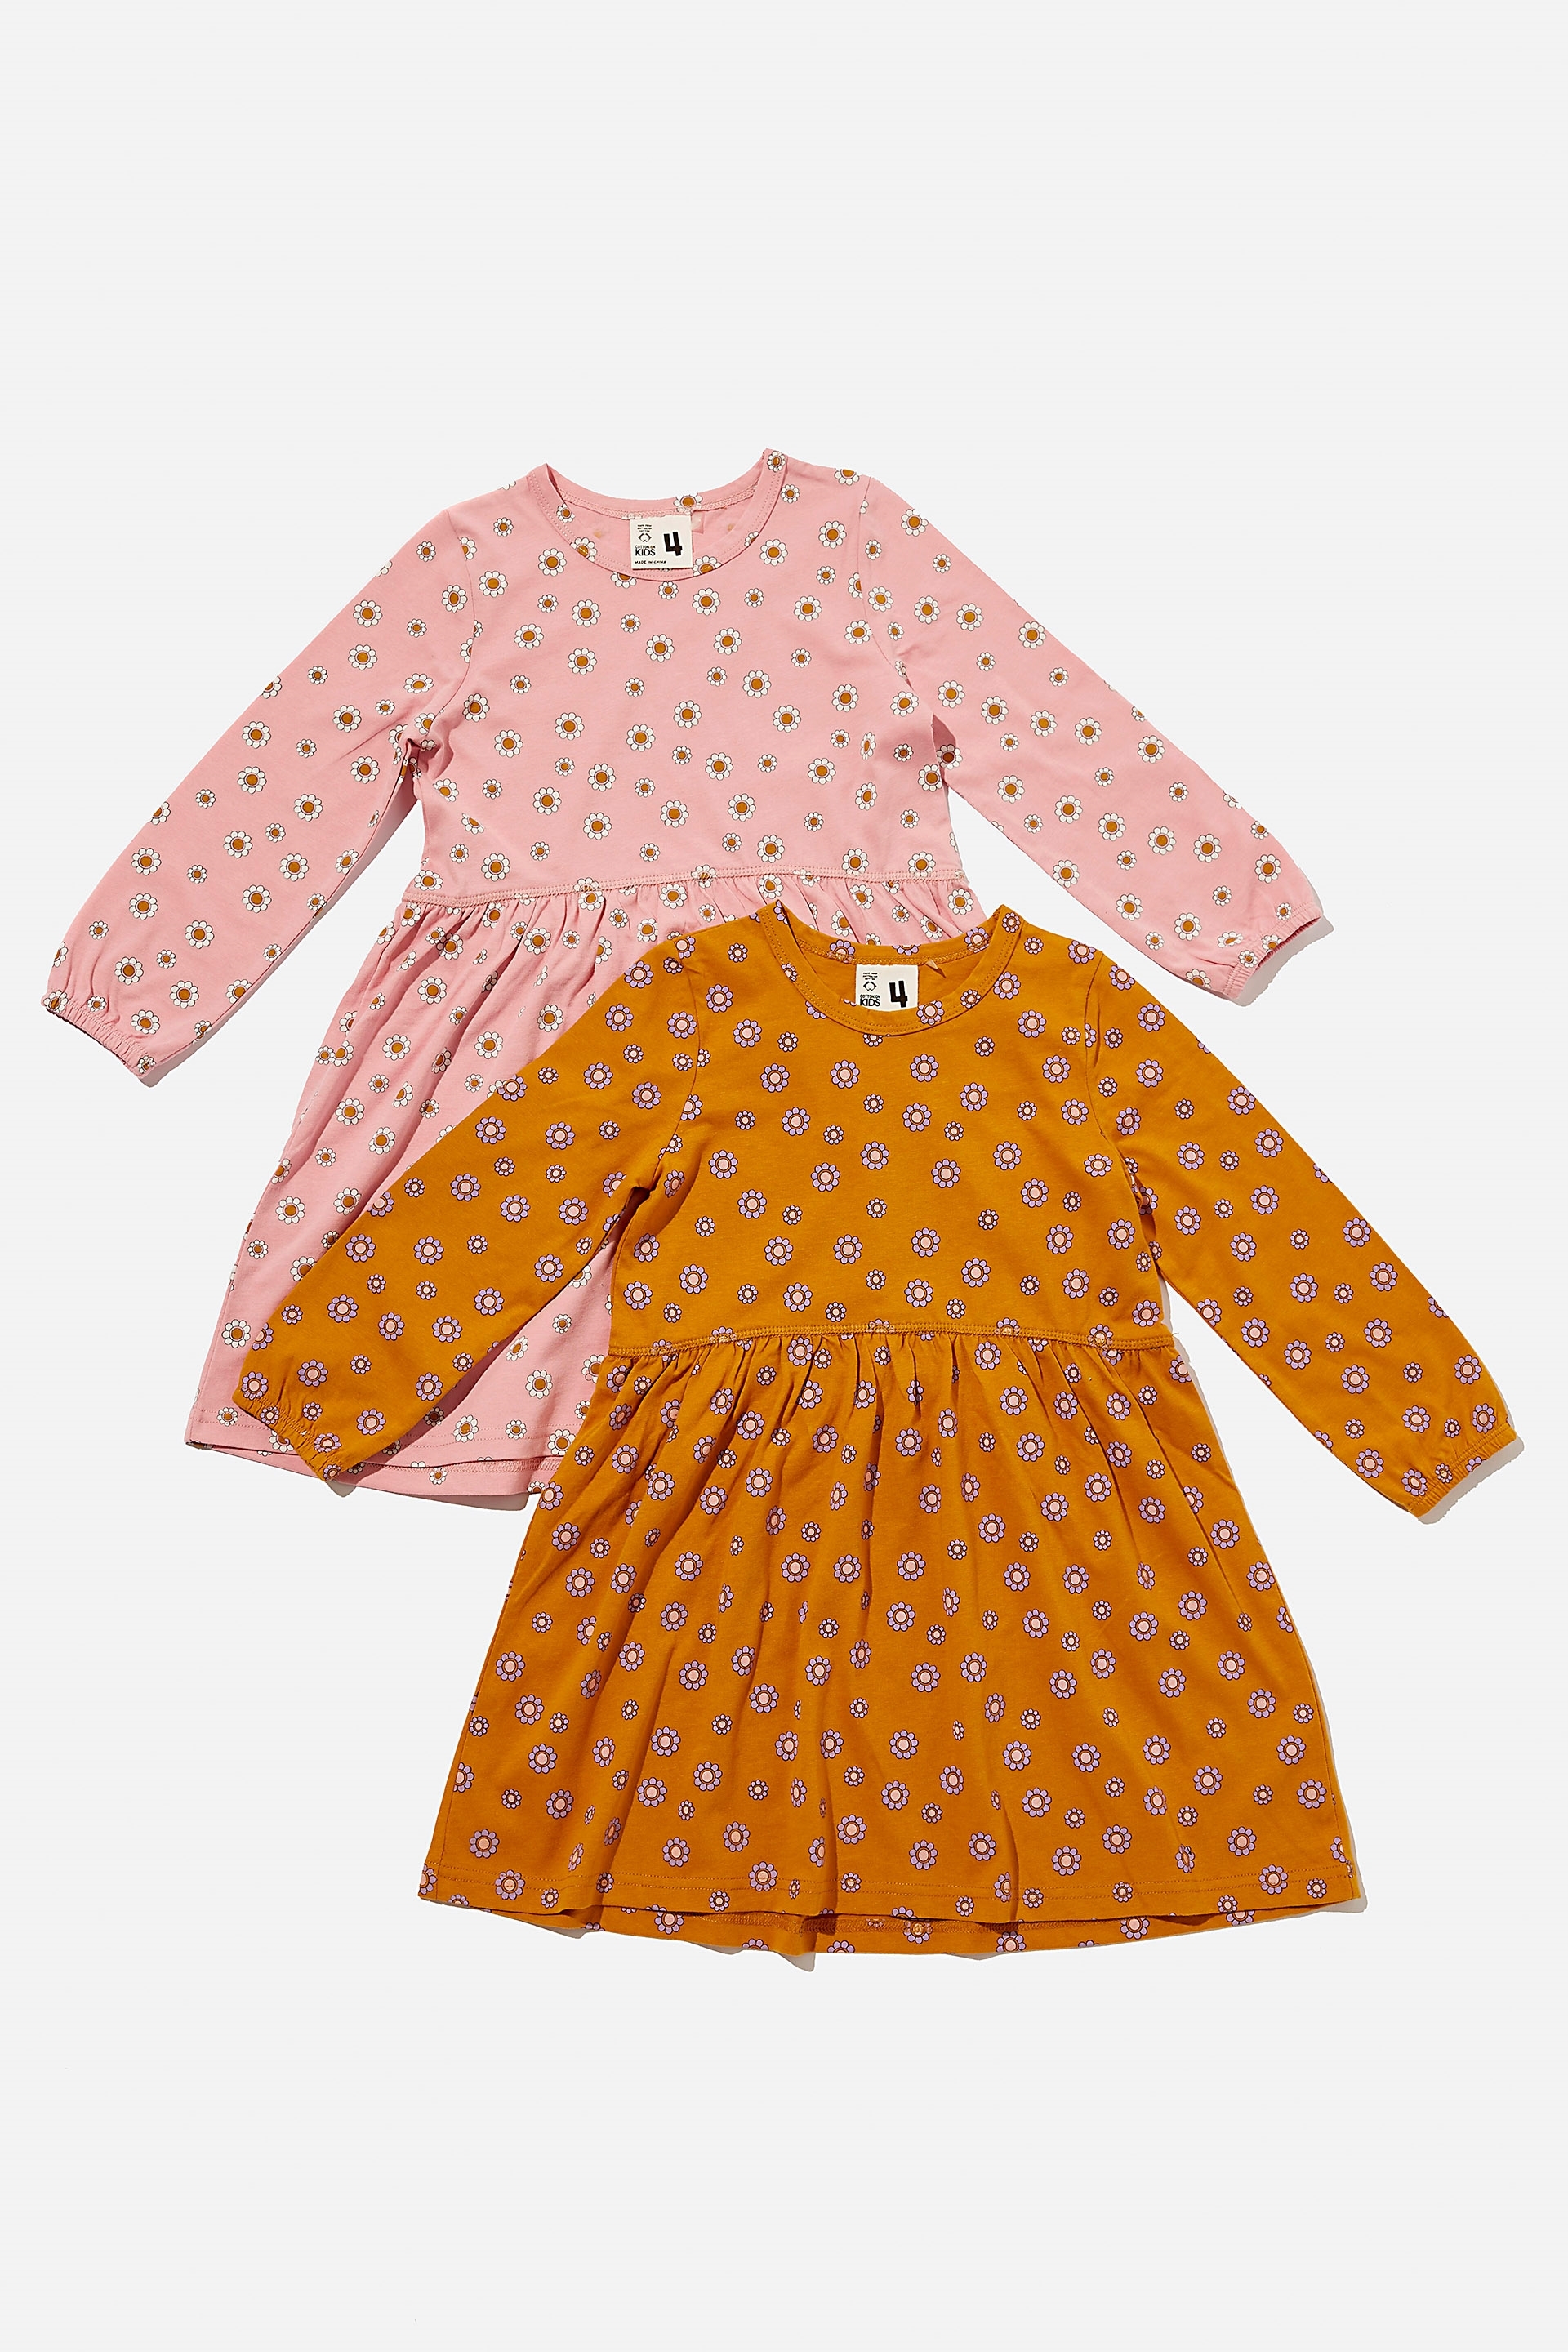 Cotton On Kids - Girls Multipack Long Sleeve Dresses 2 Pack - Garden daisy bundle